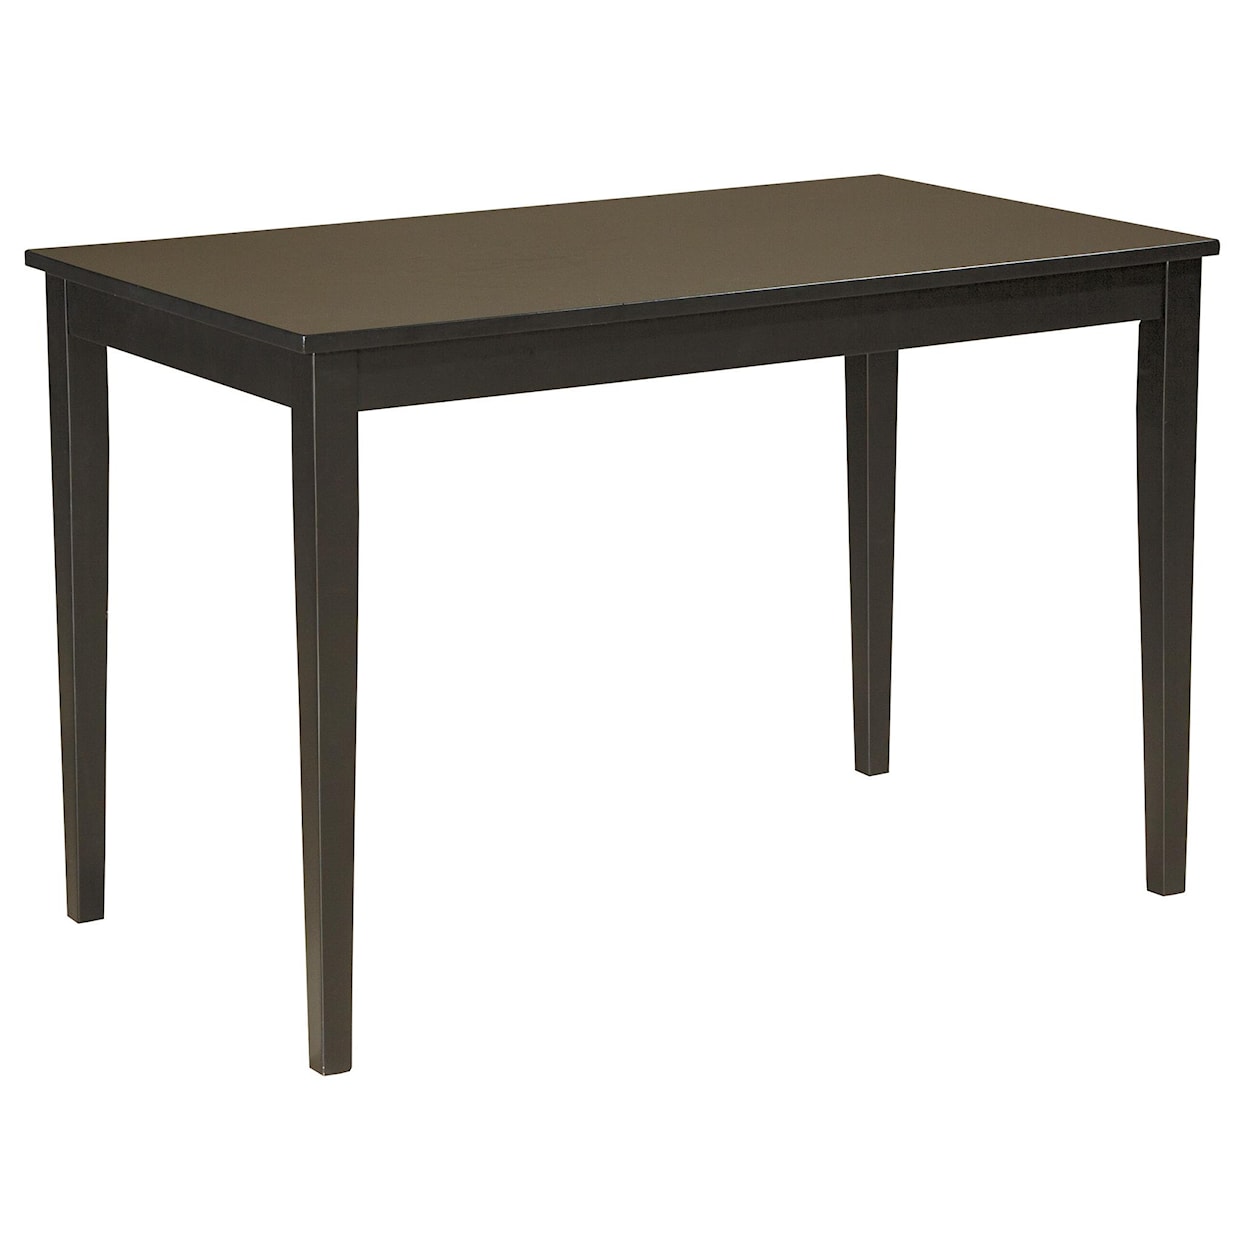 Signature Design by Ashley Furniture Kimonte 5-Piece Rectangular Table Set